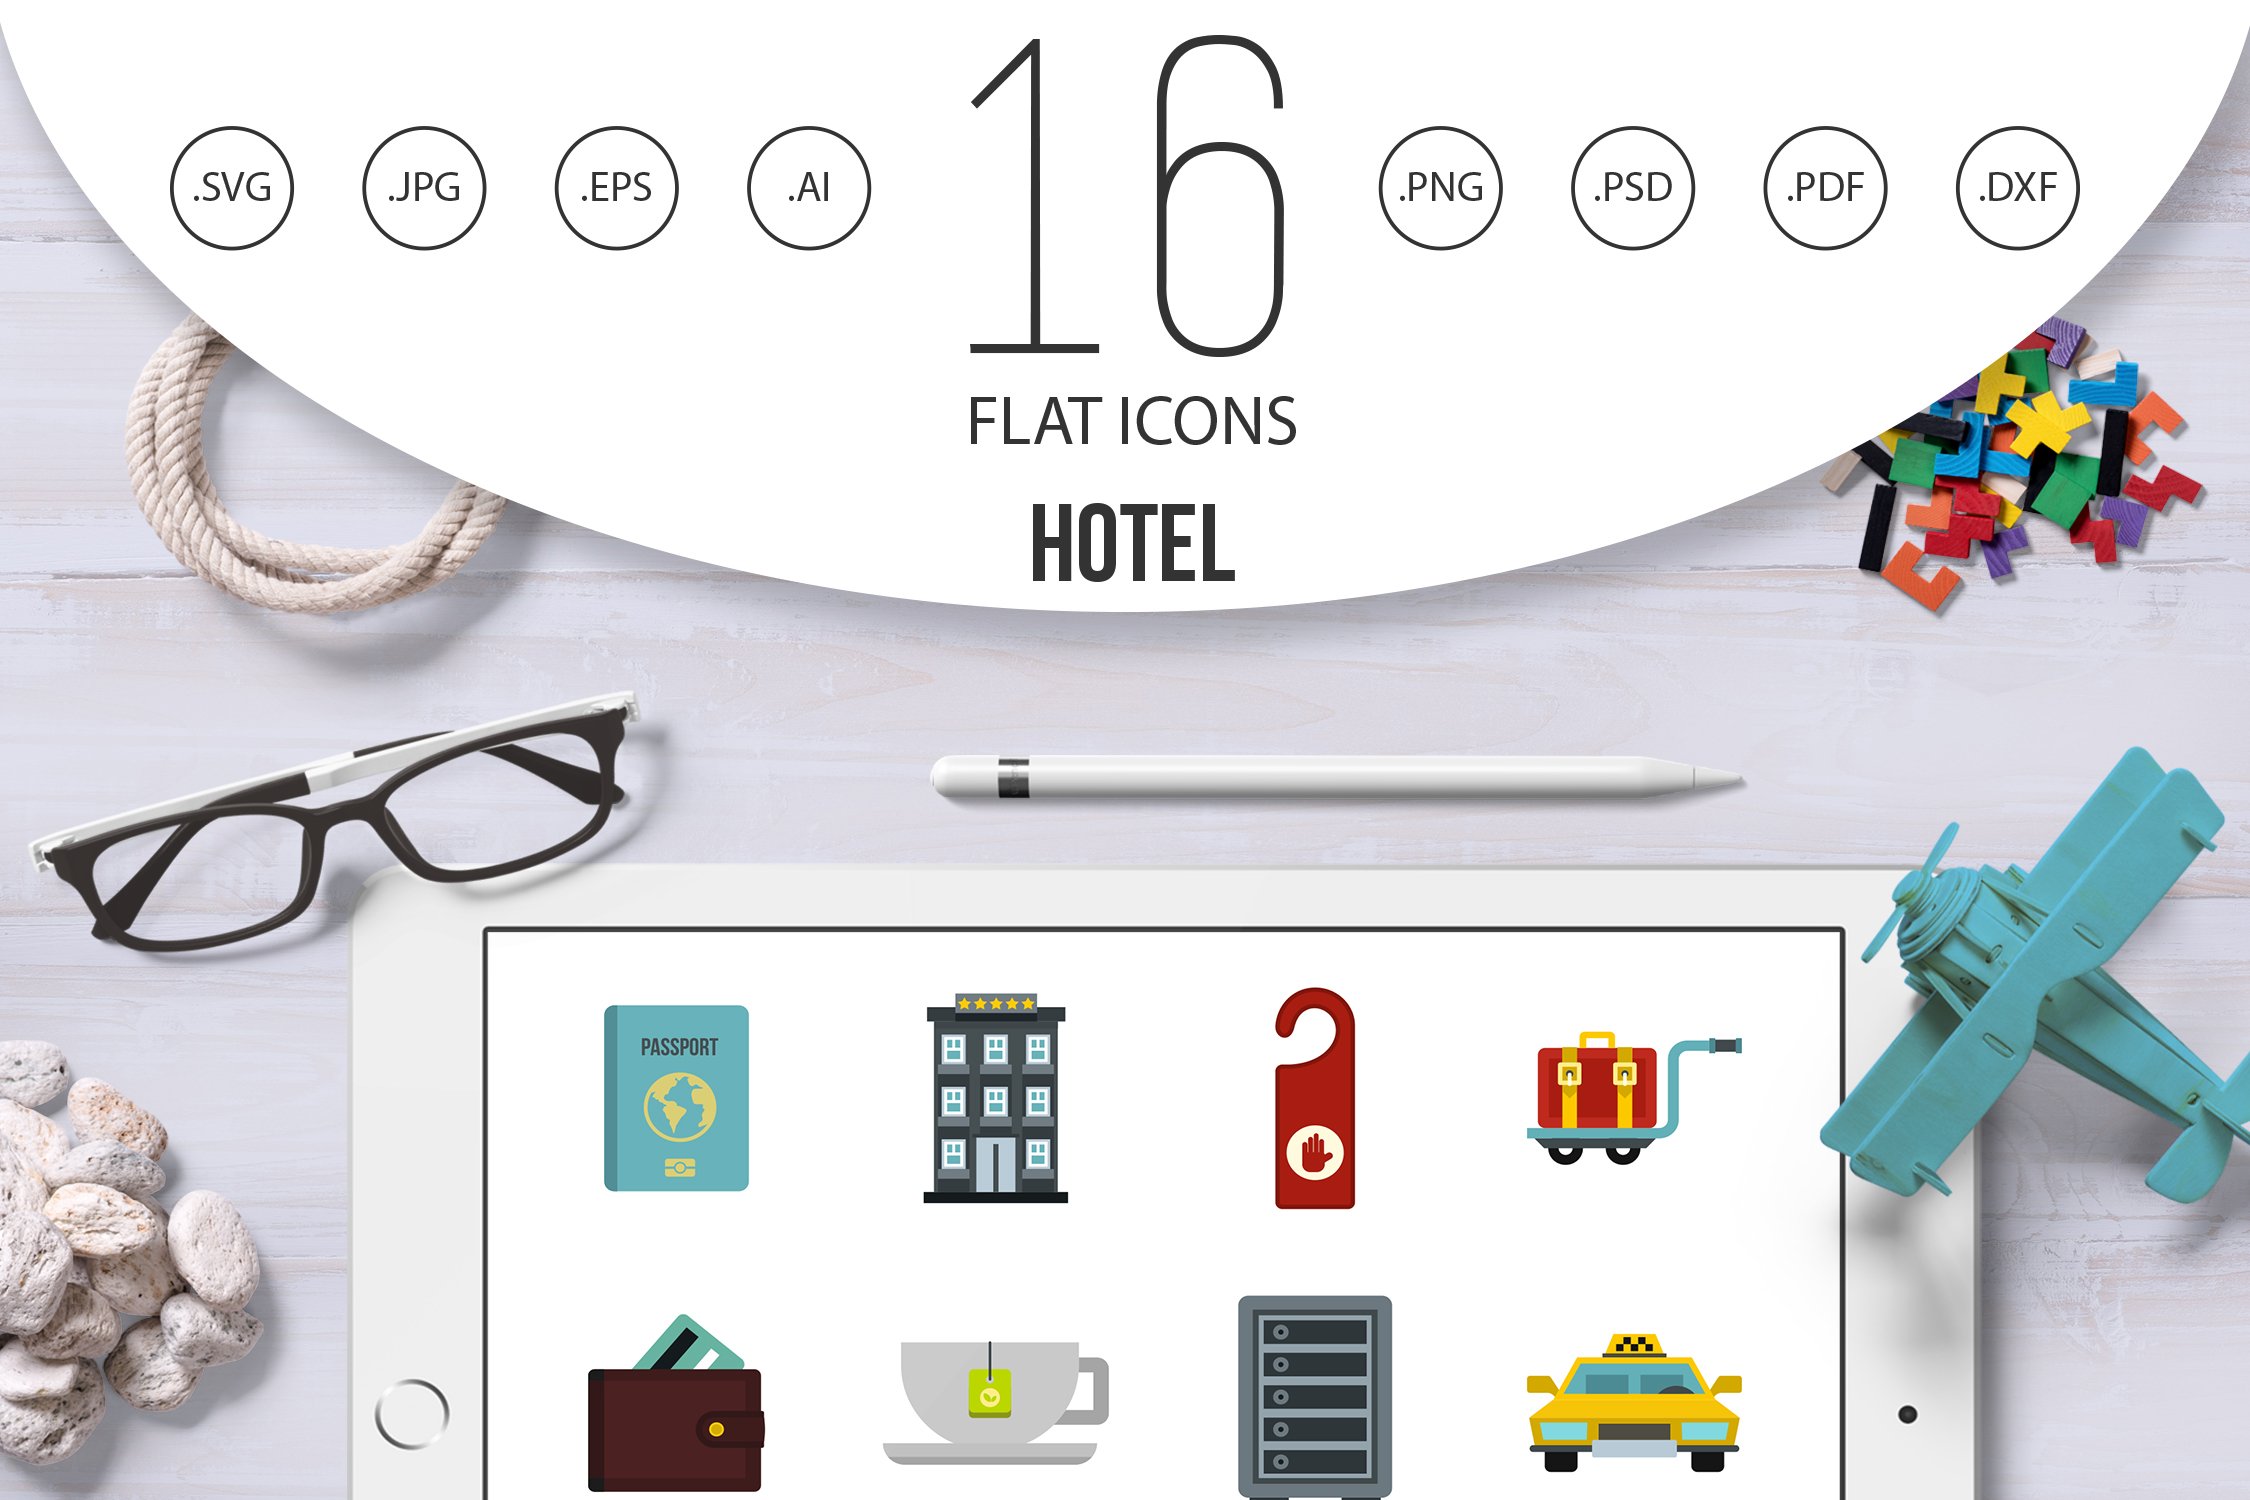 Hotel icons set, flat style cover image.